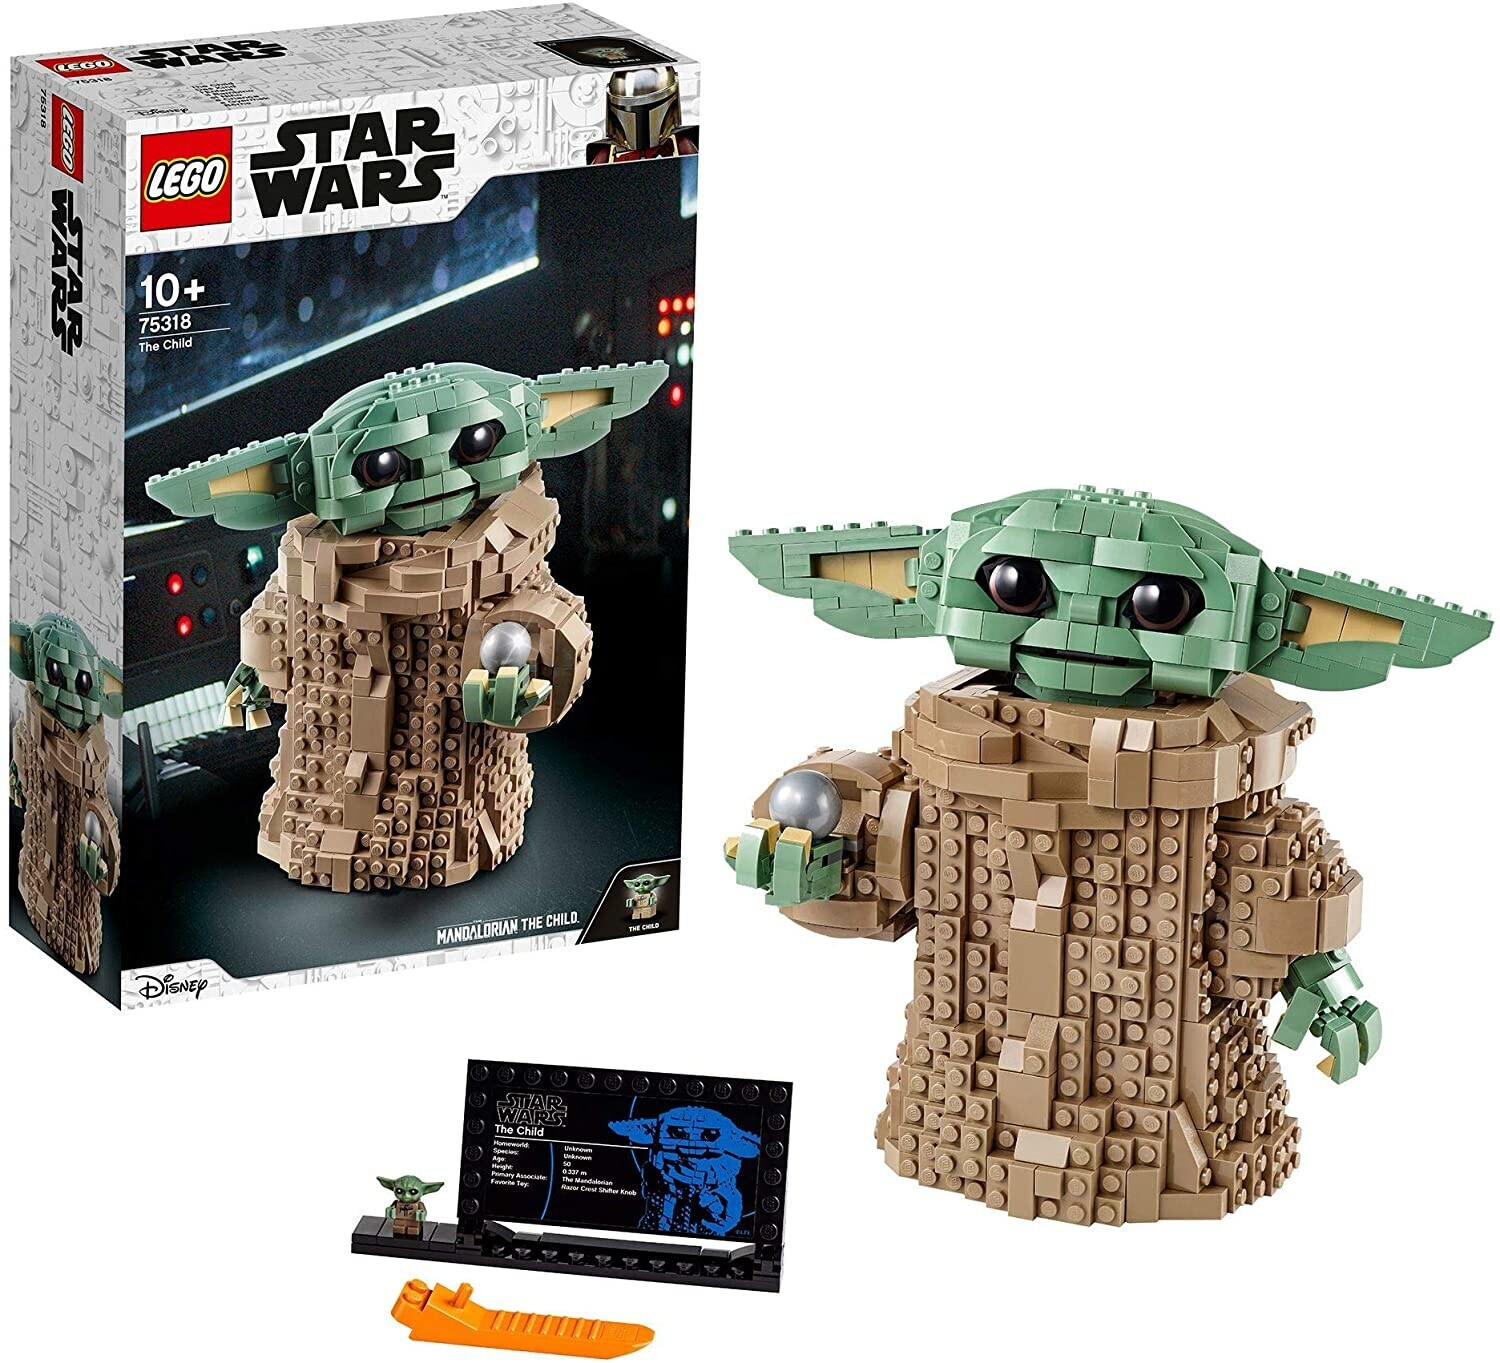 LEGO Star Wars - The Mandalorian The Child (75318)